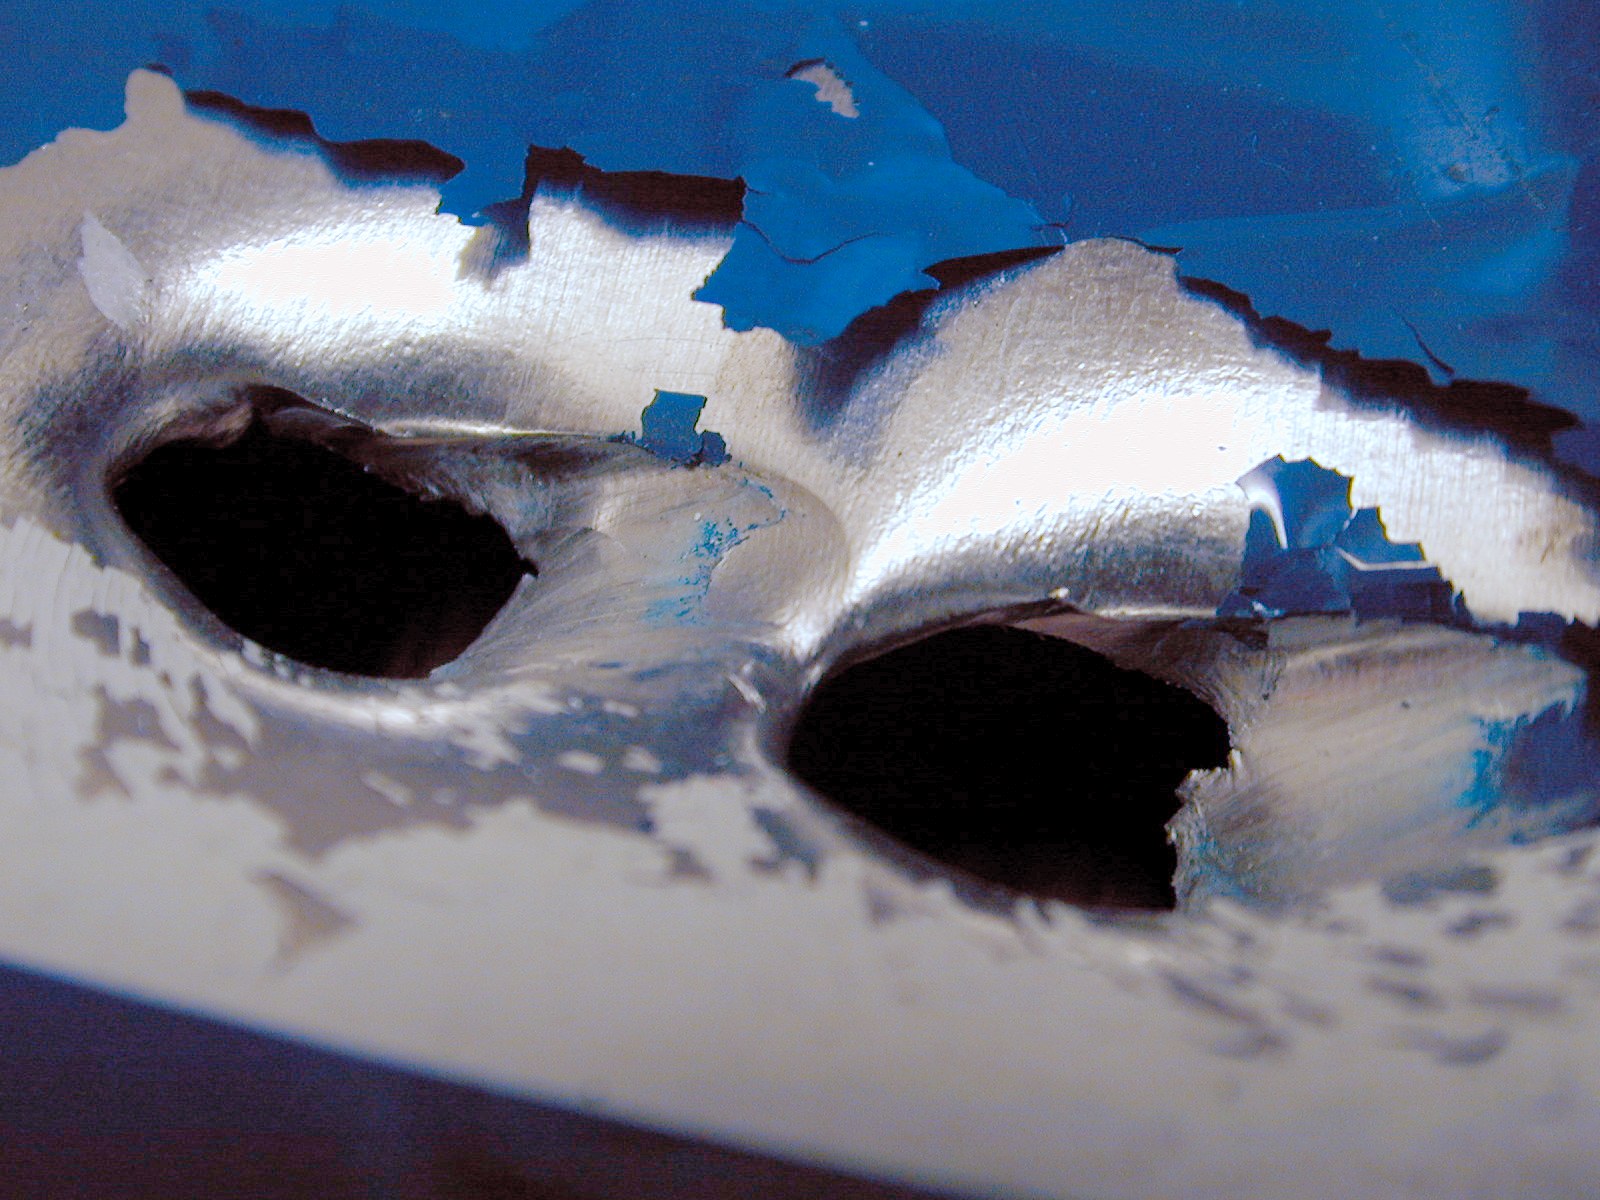 steel bulletholes holes bullet entries paint metal blue silver